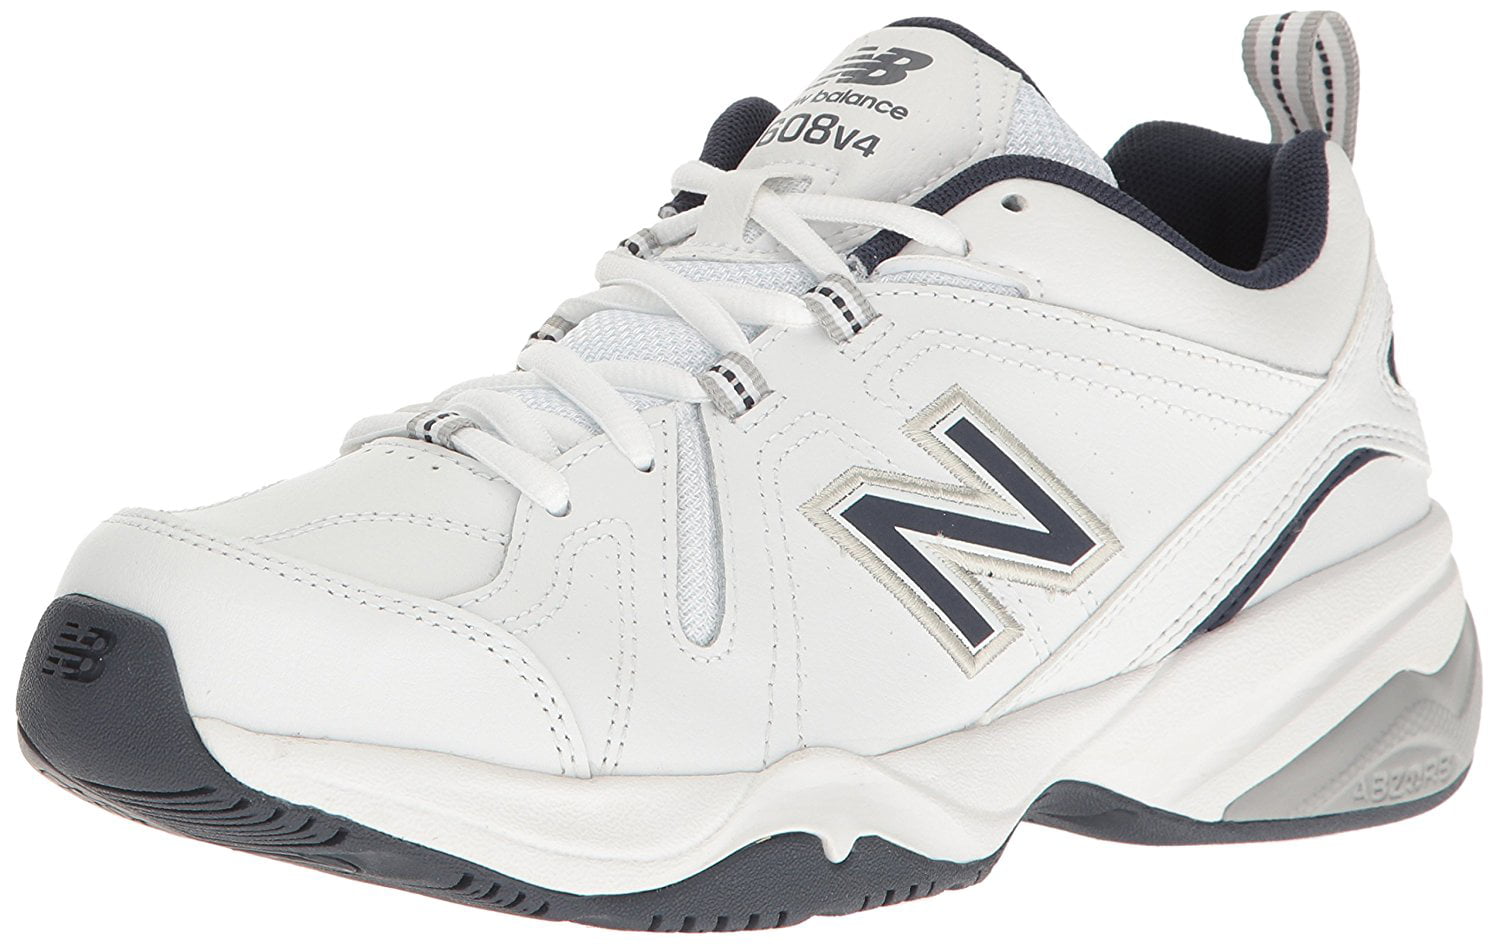 New Balance Men's MX608v4 Training Shoe, White/Navy, 9.5 2E US